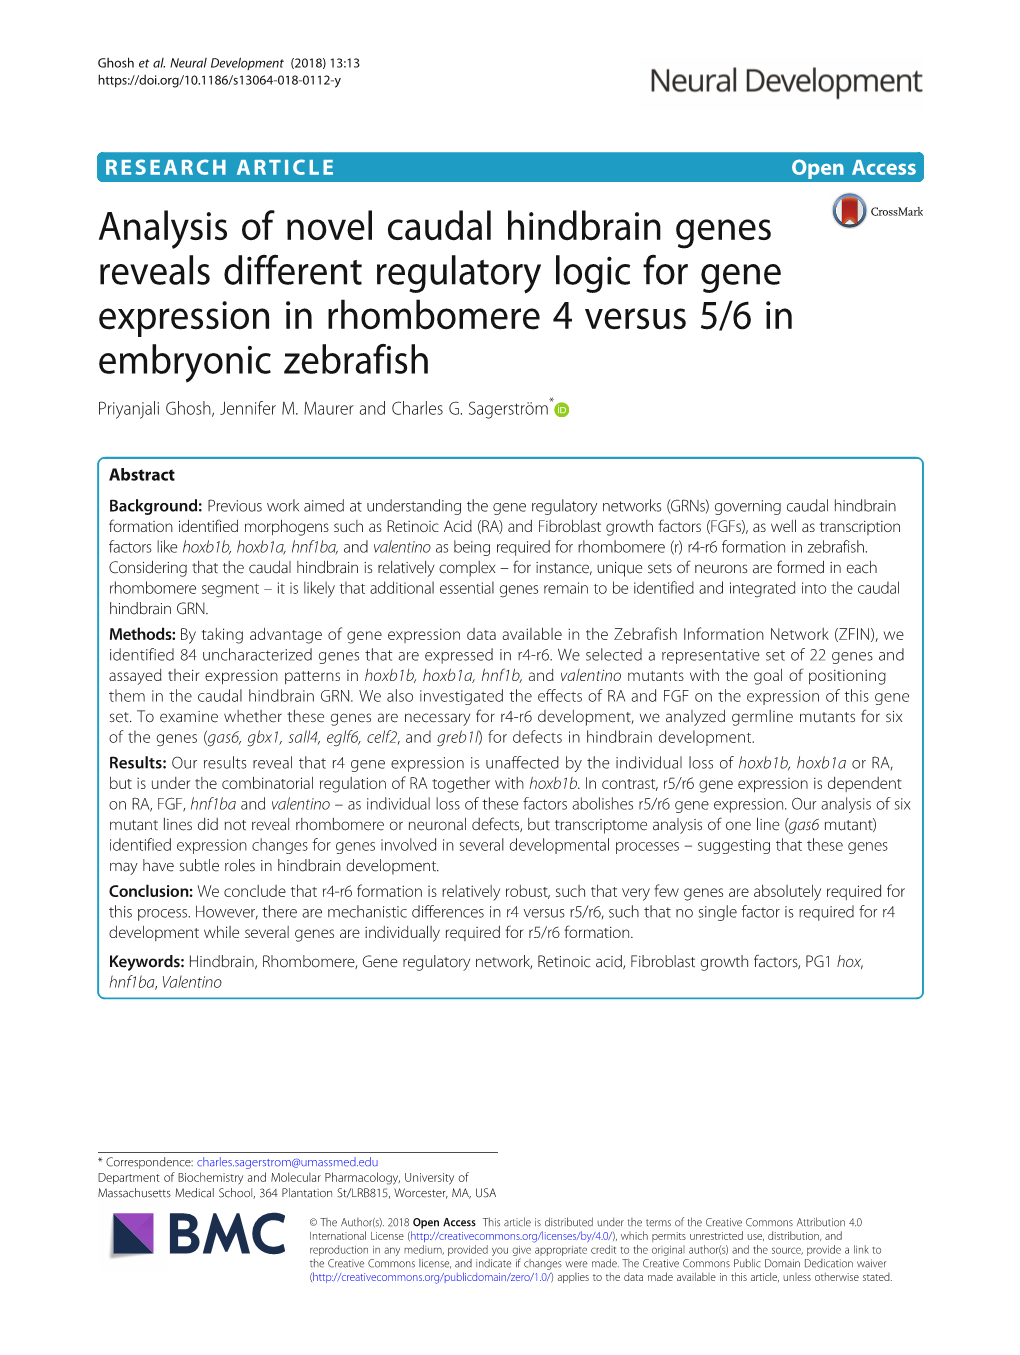 Analysis of Novel Caudal Hindbrain Genes Reveals Different Regulatory